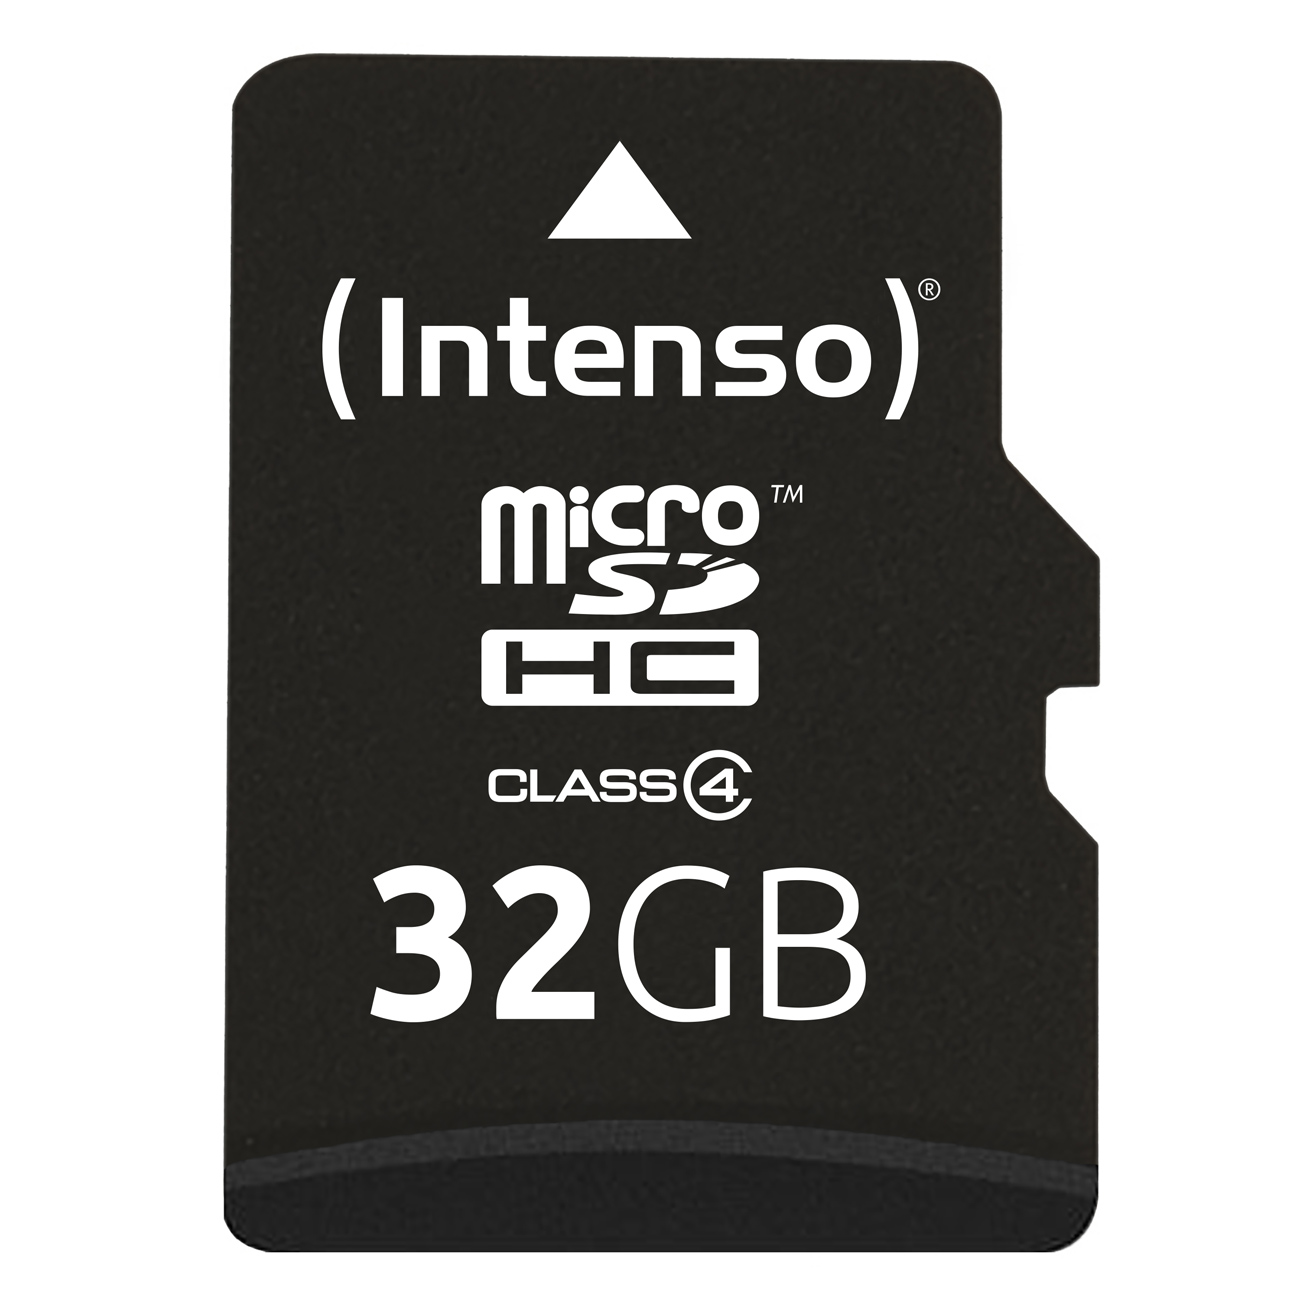 SD MicroSD Card 32GB Intenso inkl. SD Adapter - 3403480